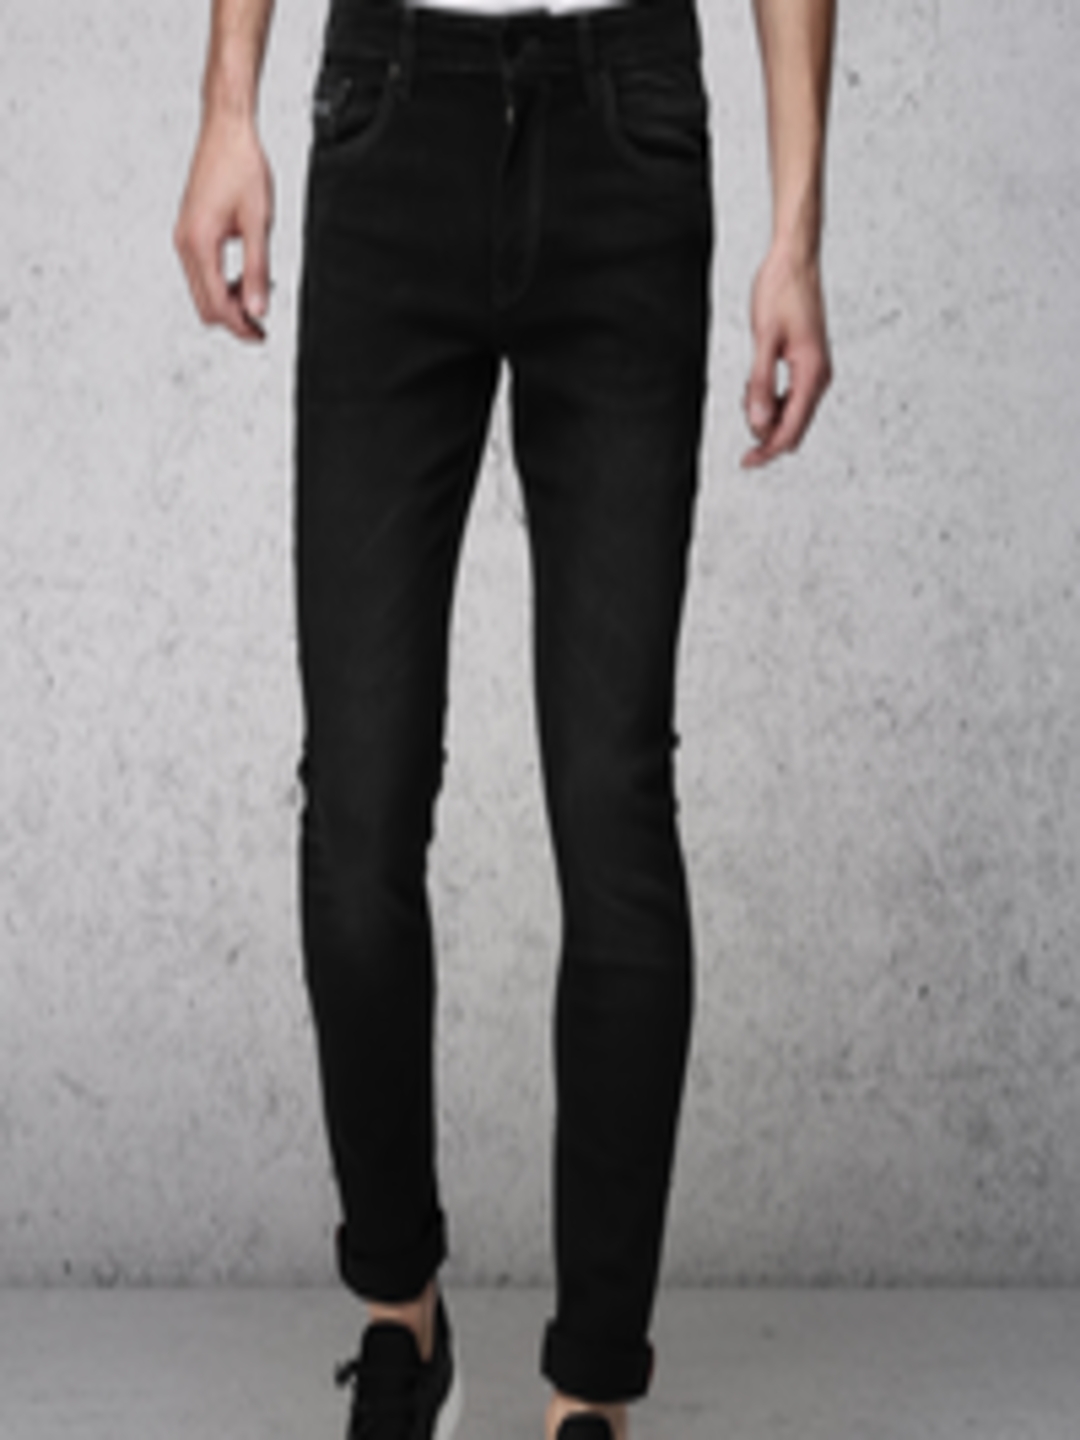 Buy Ecko Unltd Men Black Slim Fit Mid Rise Clean Look Stretchable Jeans ...